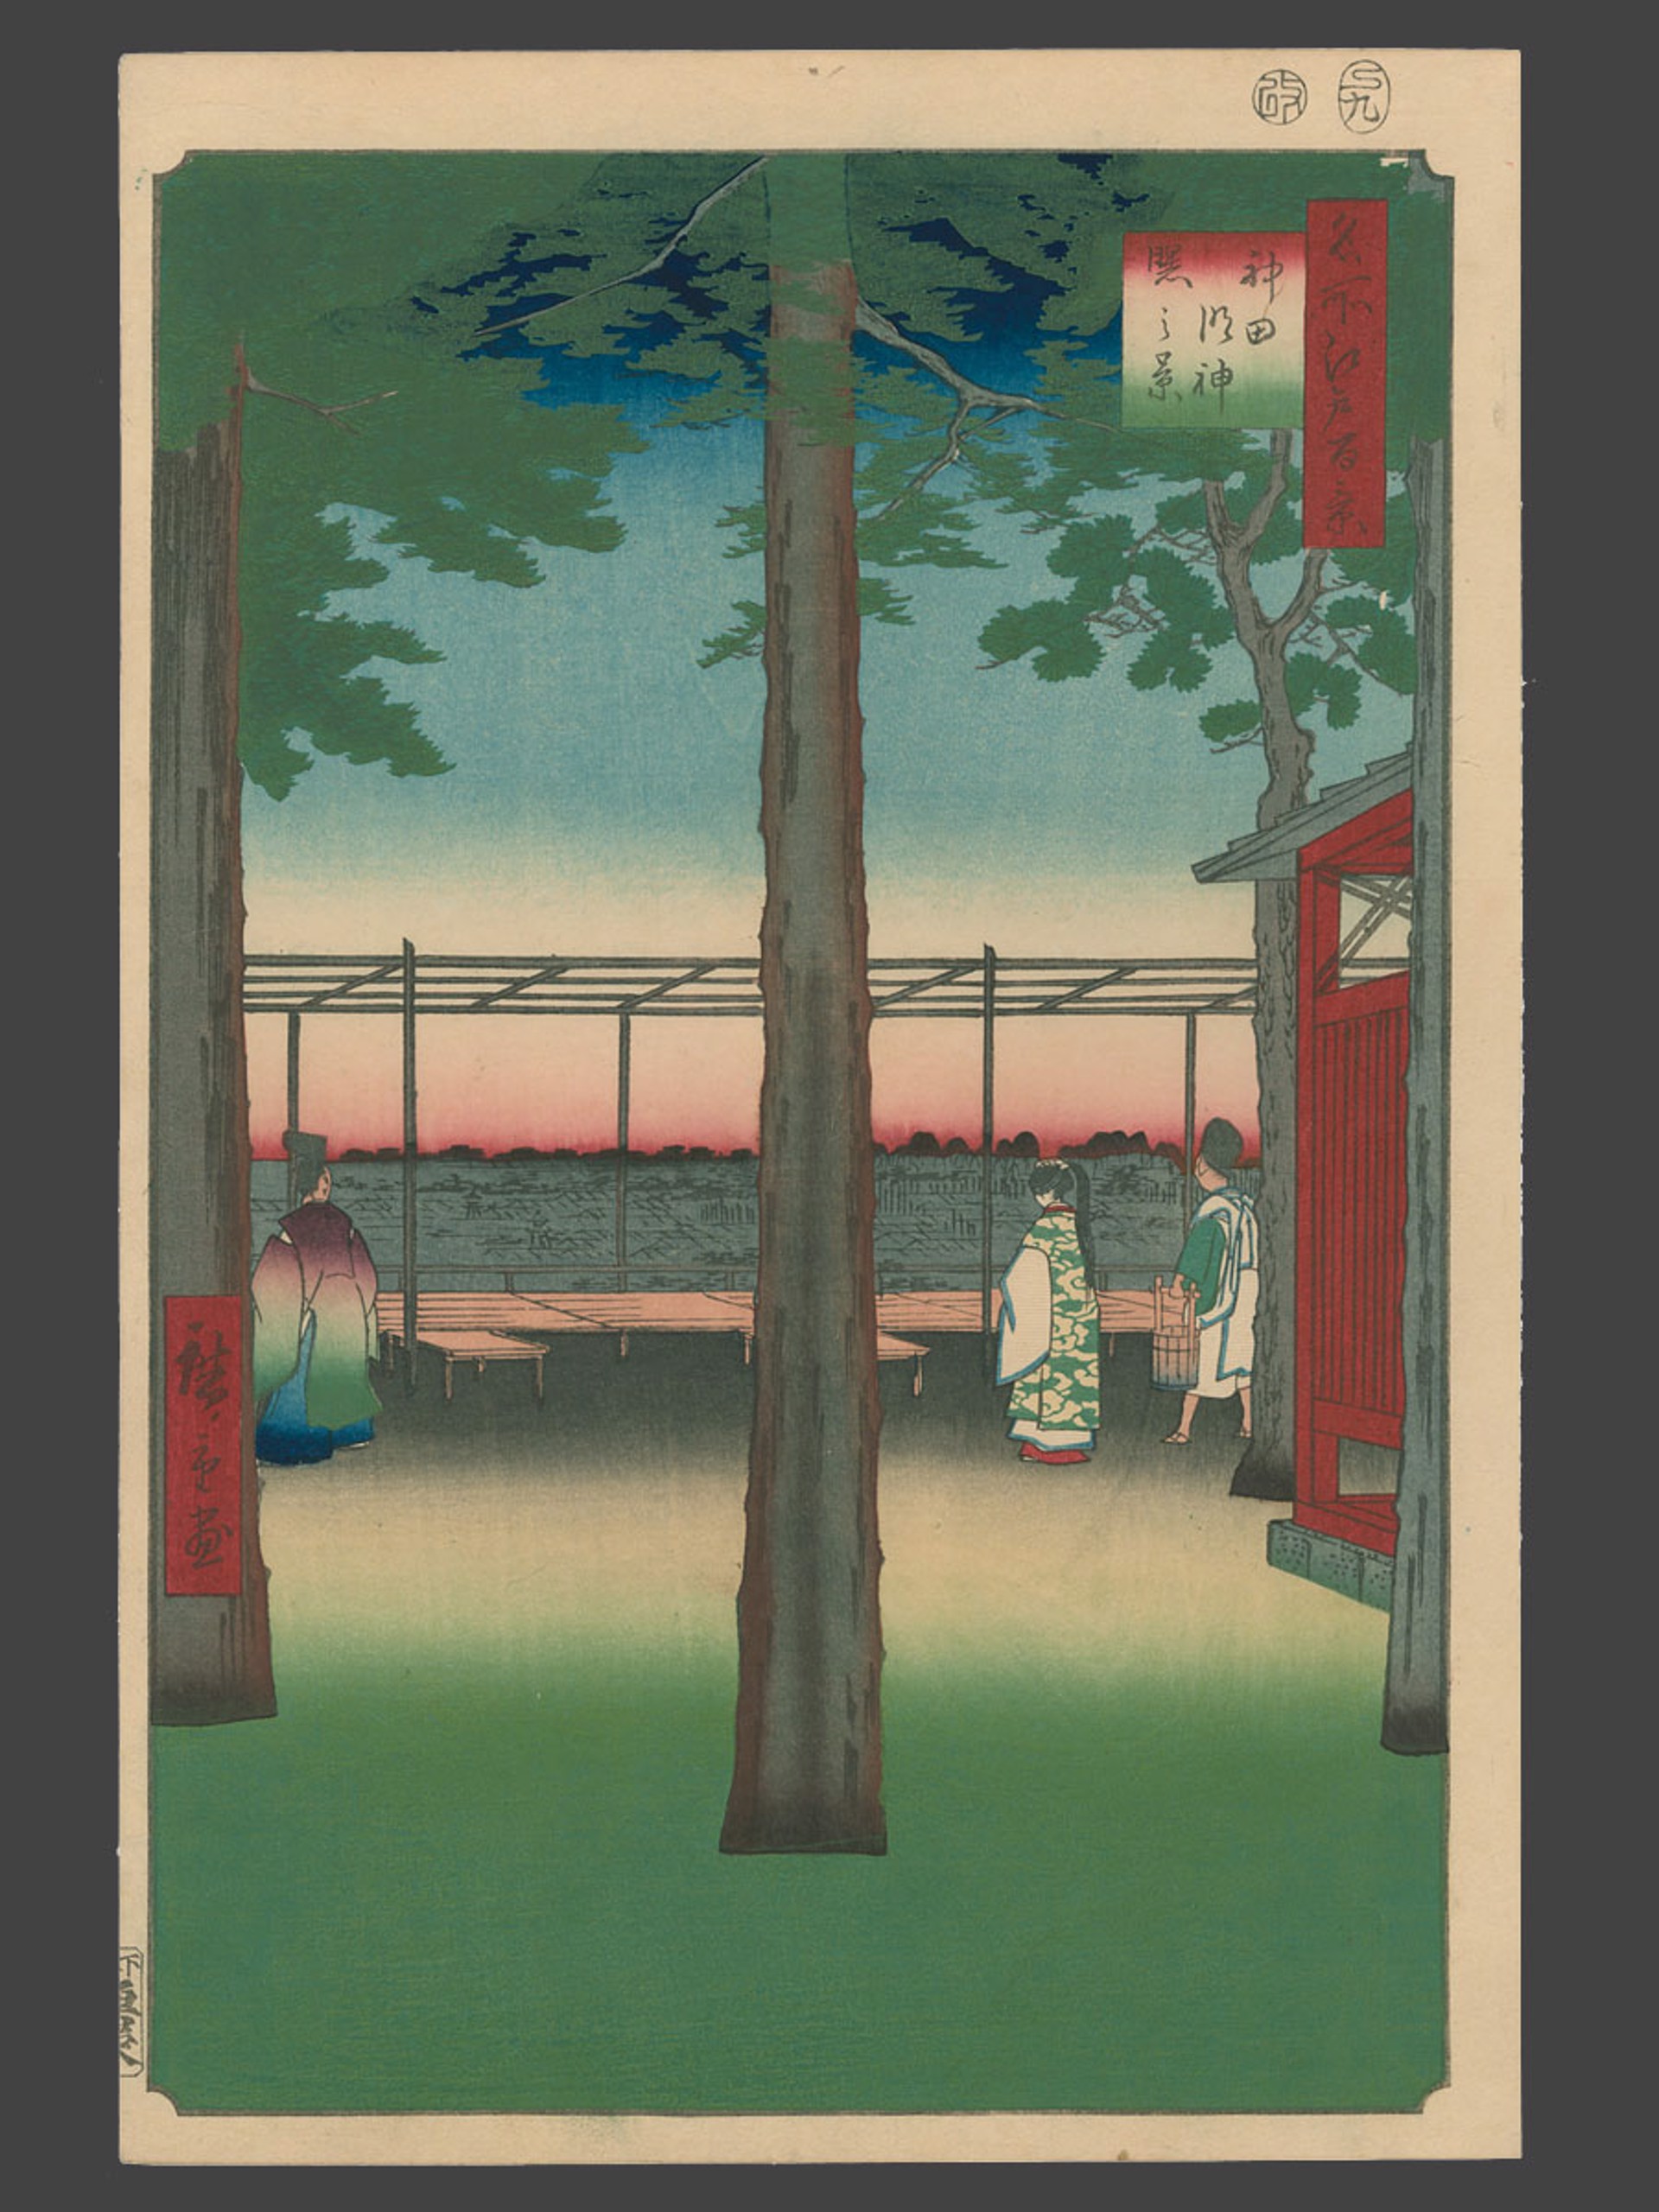 #10 Dawn at Kanda Myojin Shrine 100 Views of Edo by Hiroshige